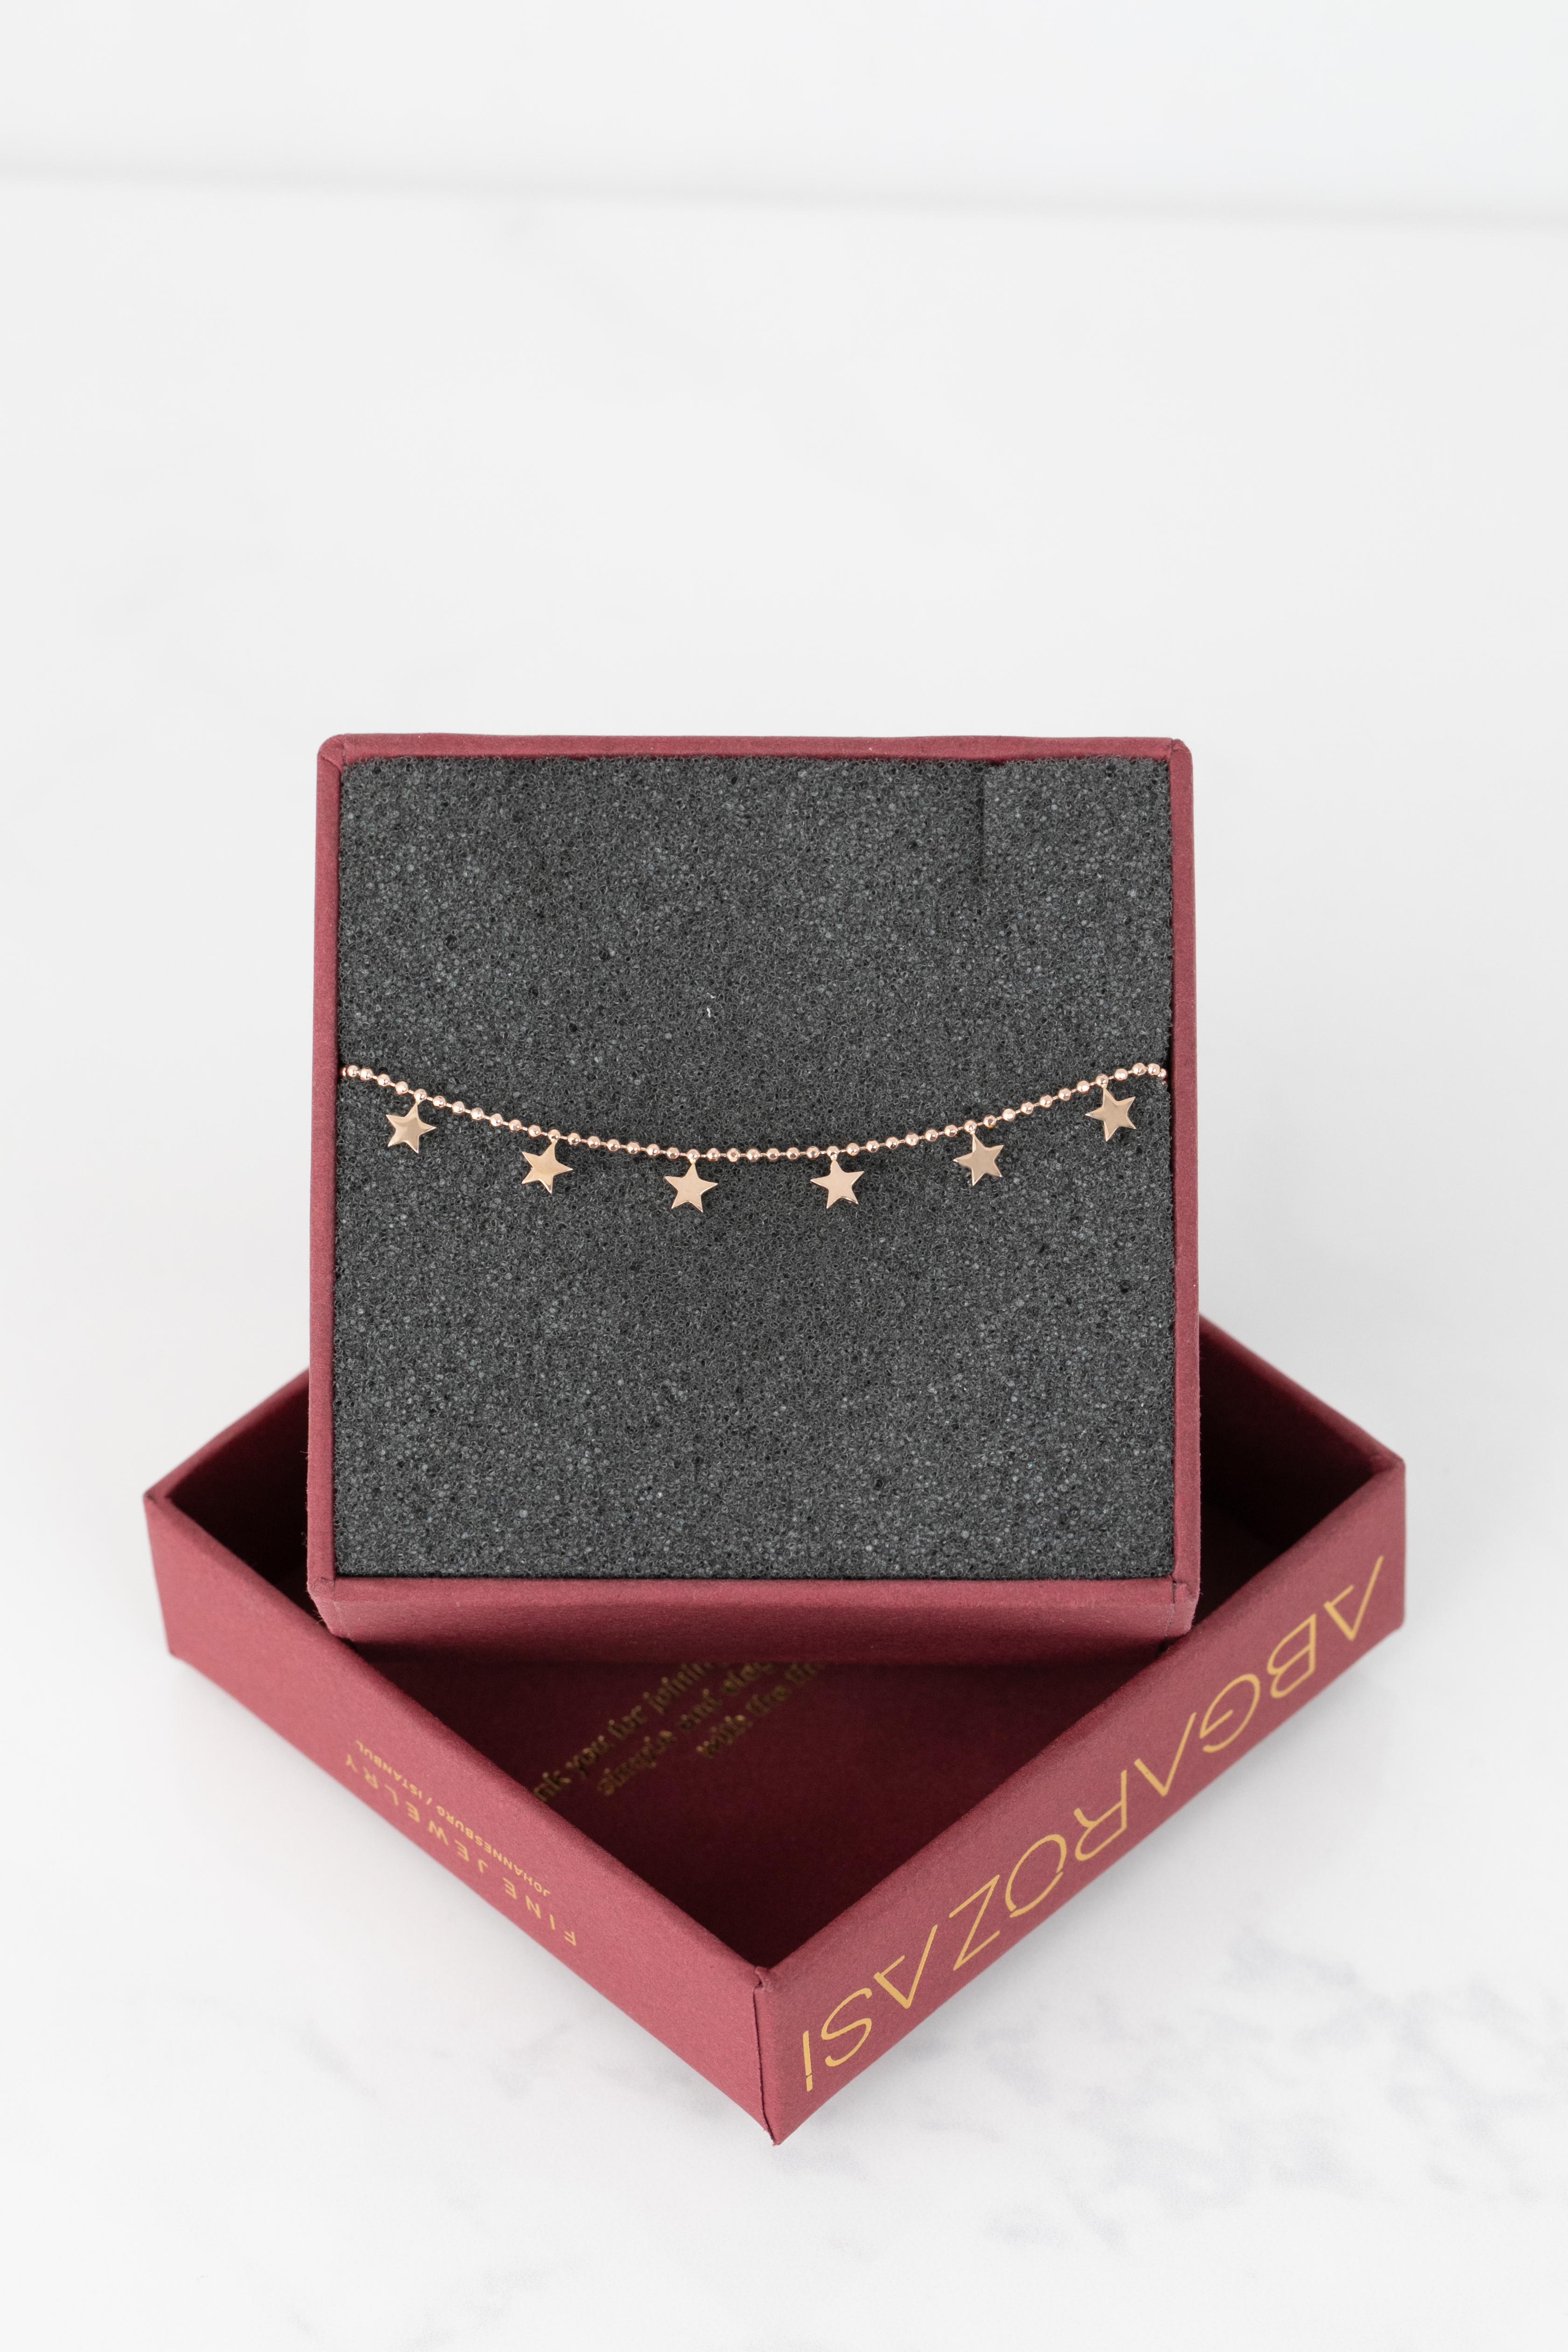 14K Gold Star Charm Perlenarmband, 585K Gold Perlenkette Stern-Armband Damen im Angebot